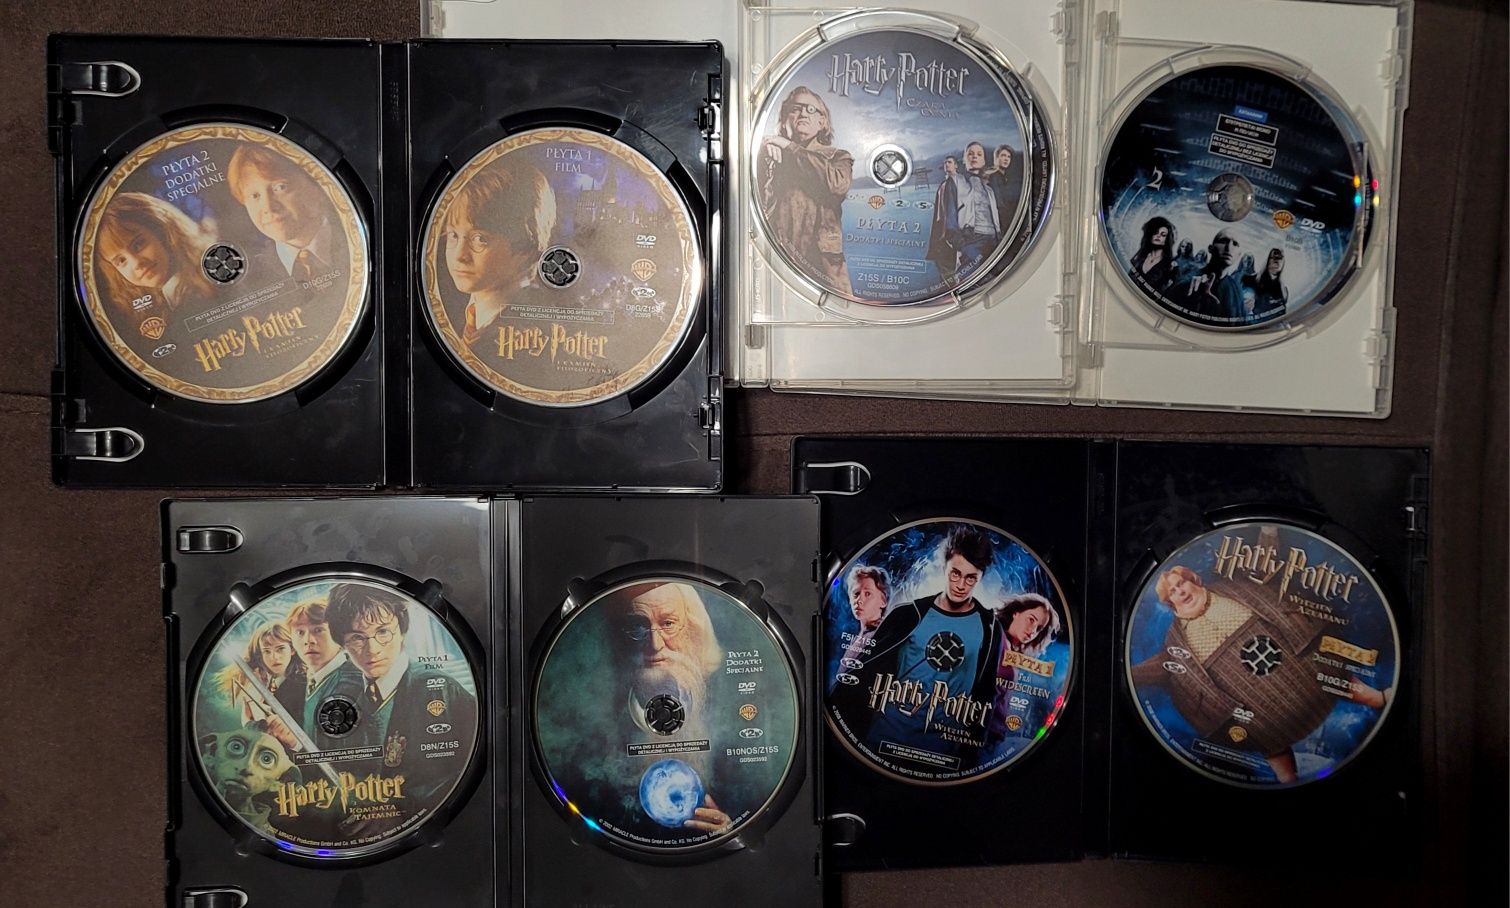 Pakiet sześciu części Harrego Pottera DVD